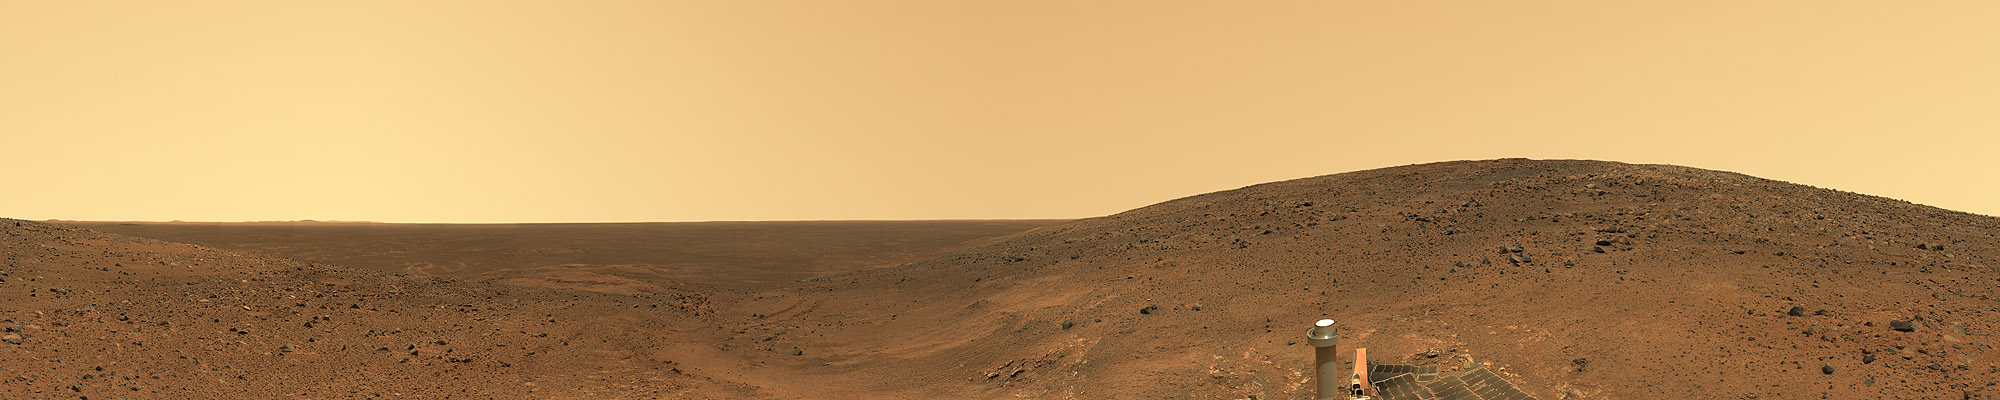 Mars Rover Spirit Independence Panorama